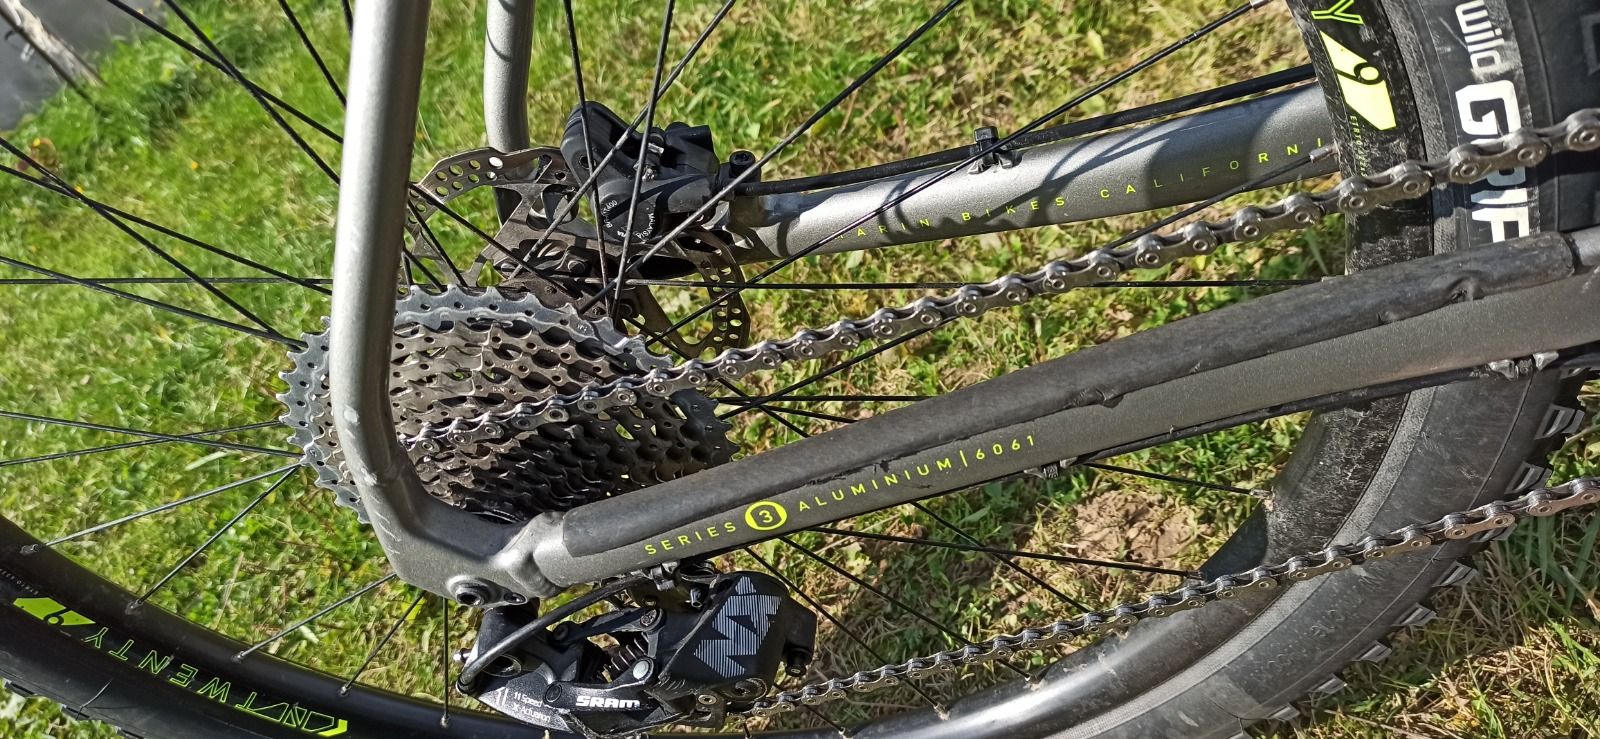 Велосипед marin nail trail 6 2019 года.